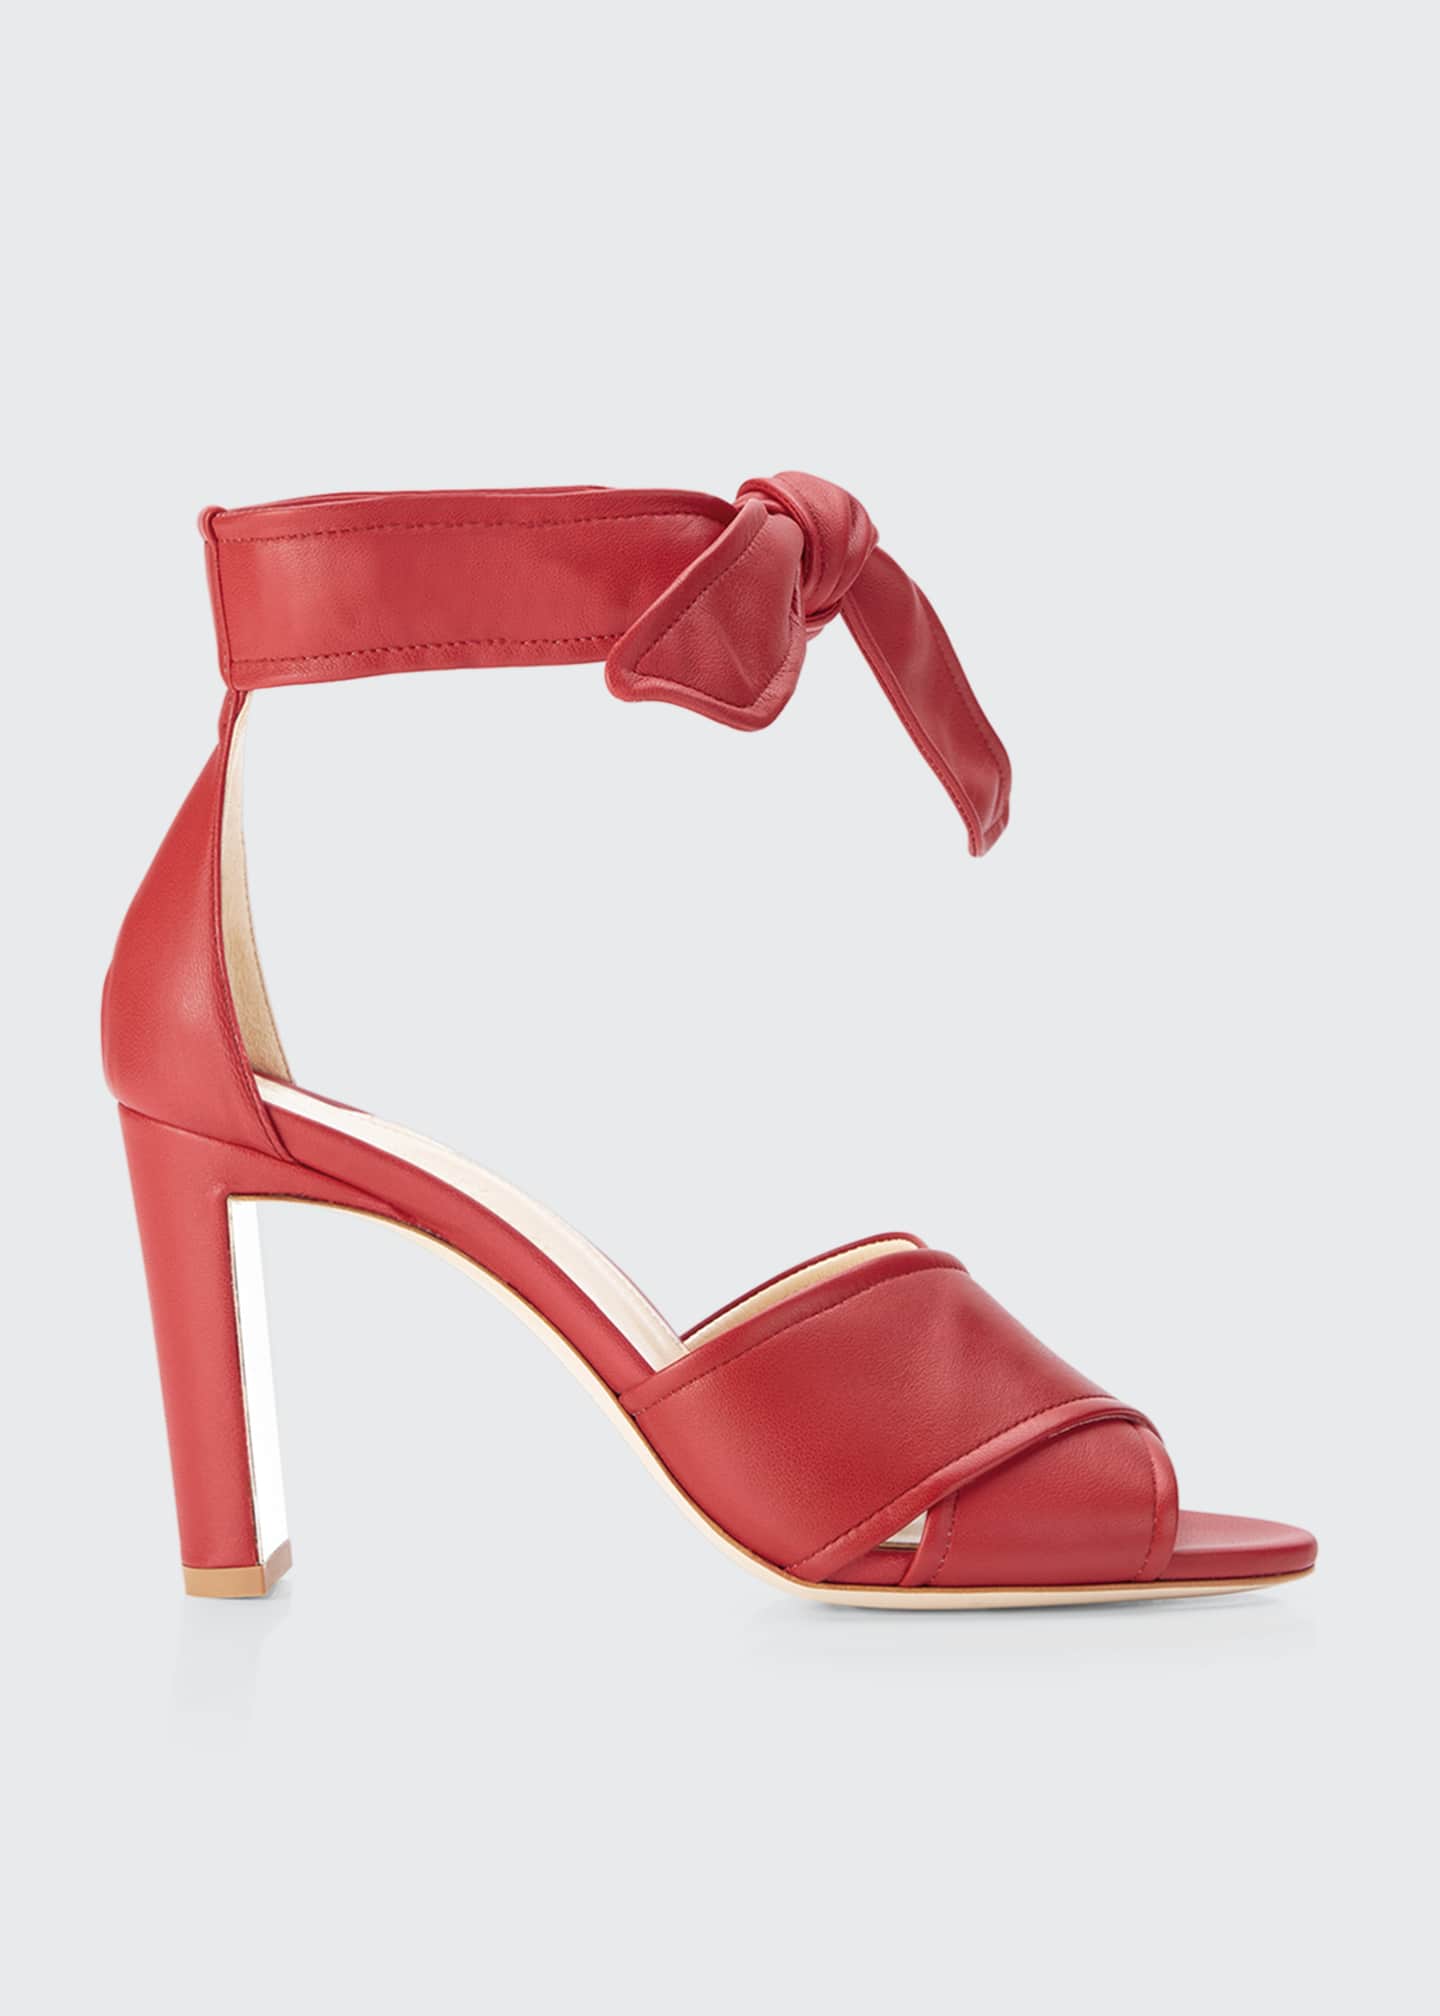 Marion Parke Leah Metallic Leather Ankle-Tie Sandals - Bergdorf Goodman